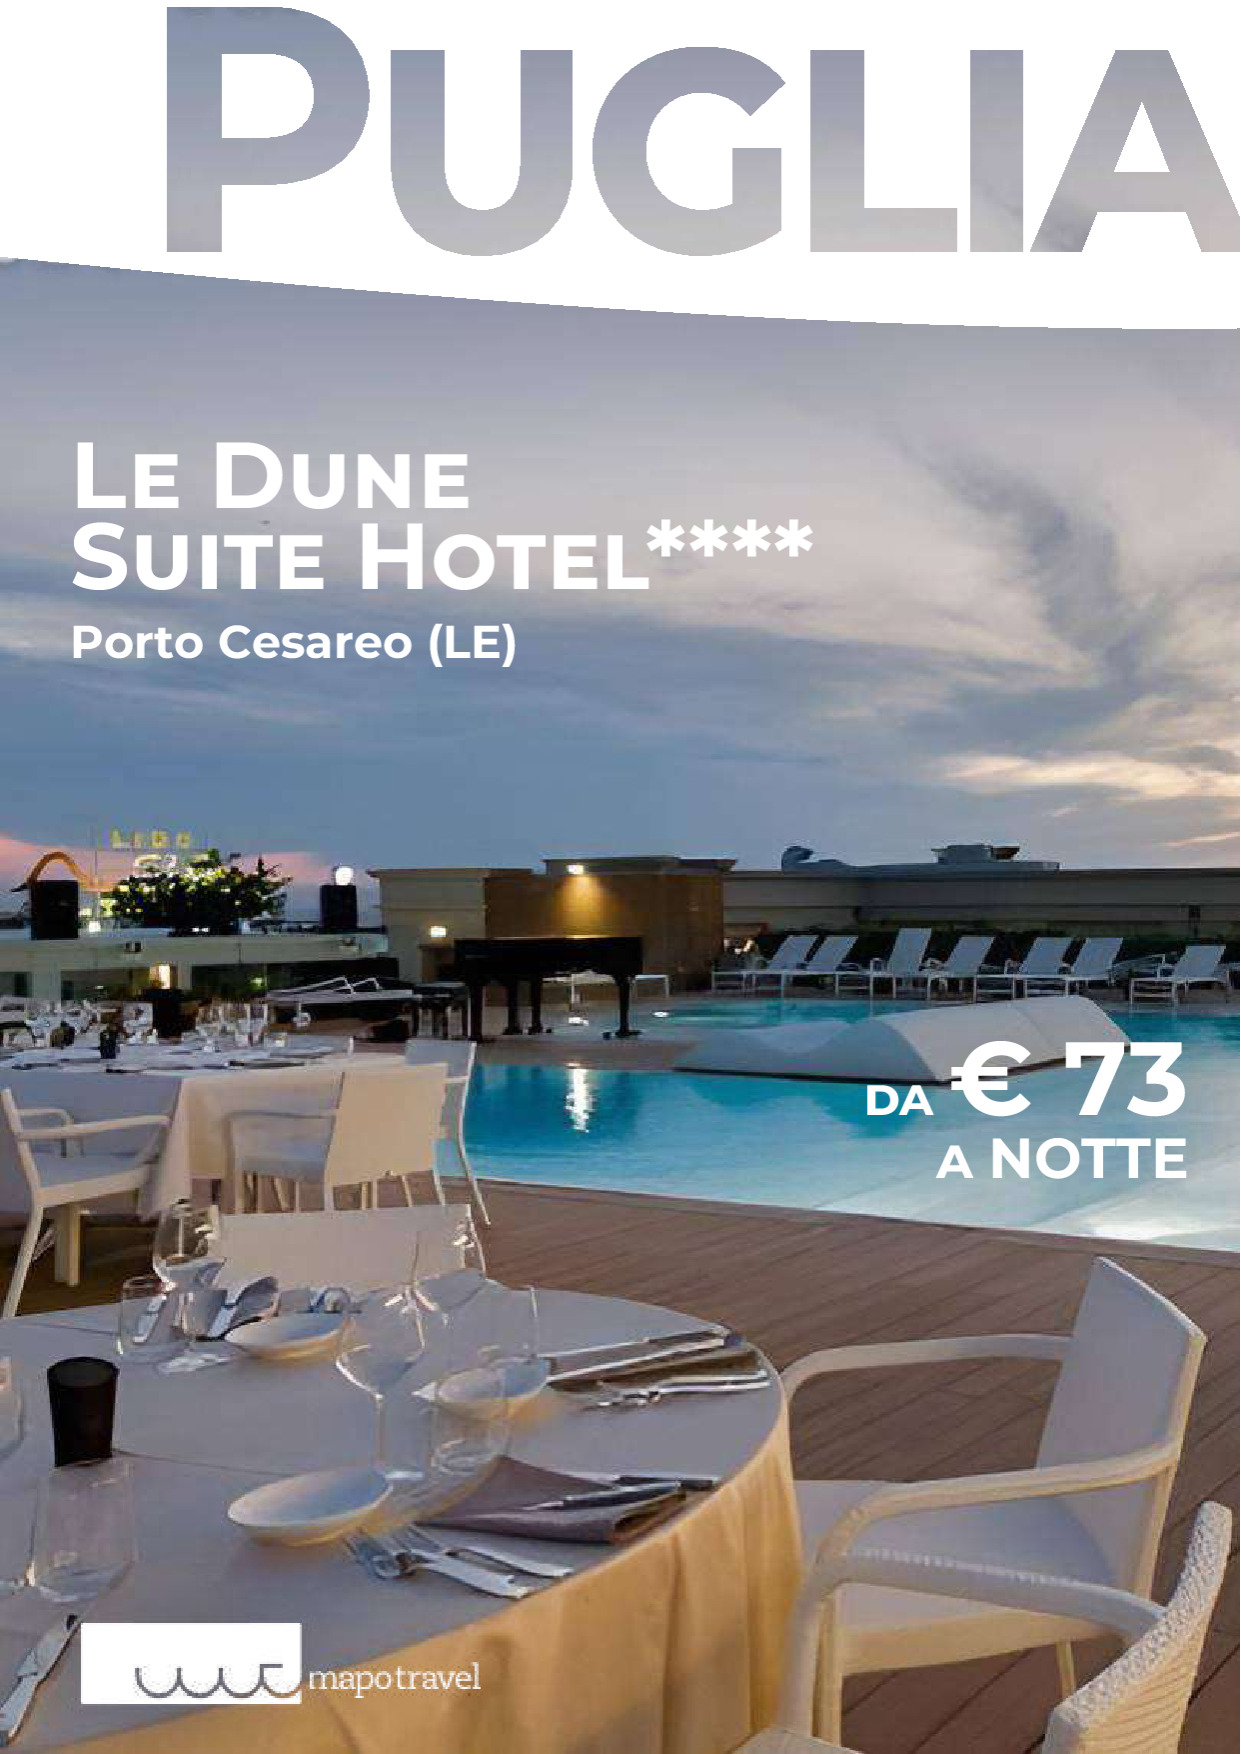 Le Dune Suite Hotel